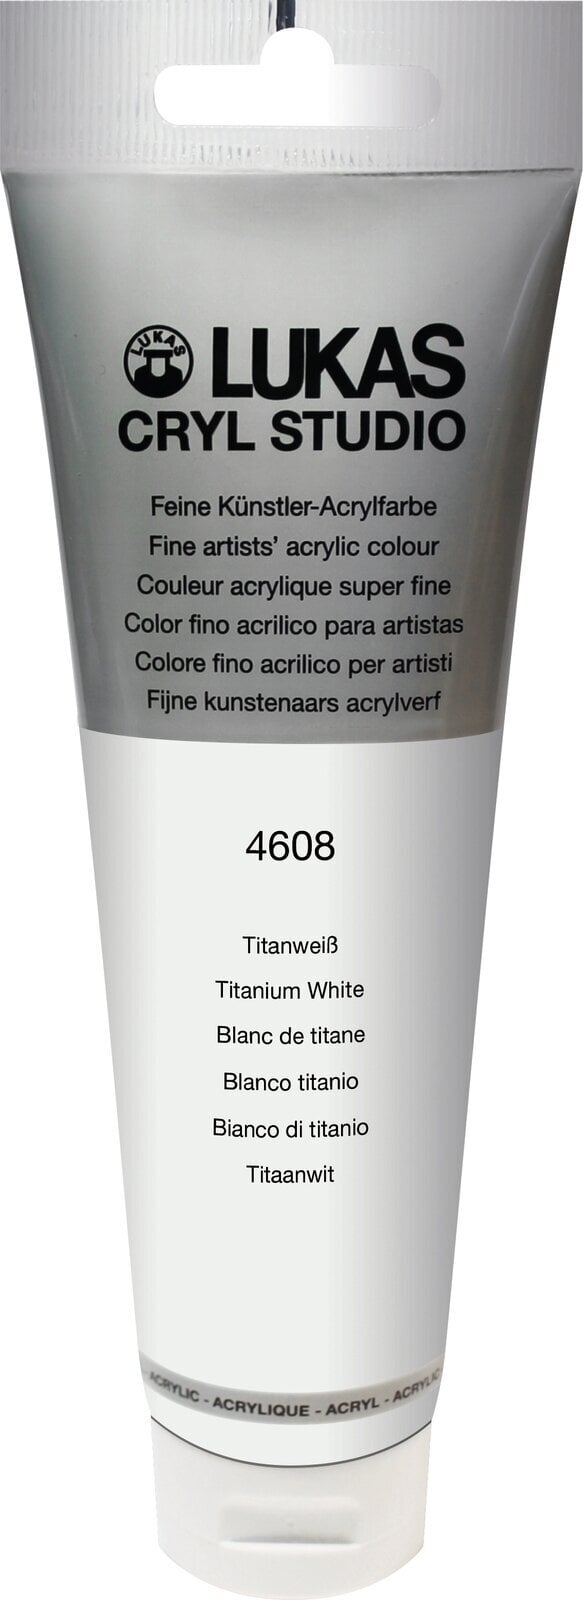 Akrylová farba Lukas Cryl Studio Acrylic Paint Plastic Tube Akrylová farba Titanium White 125 ml 1 ks